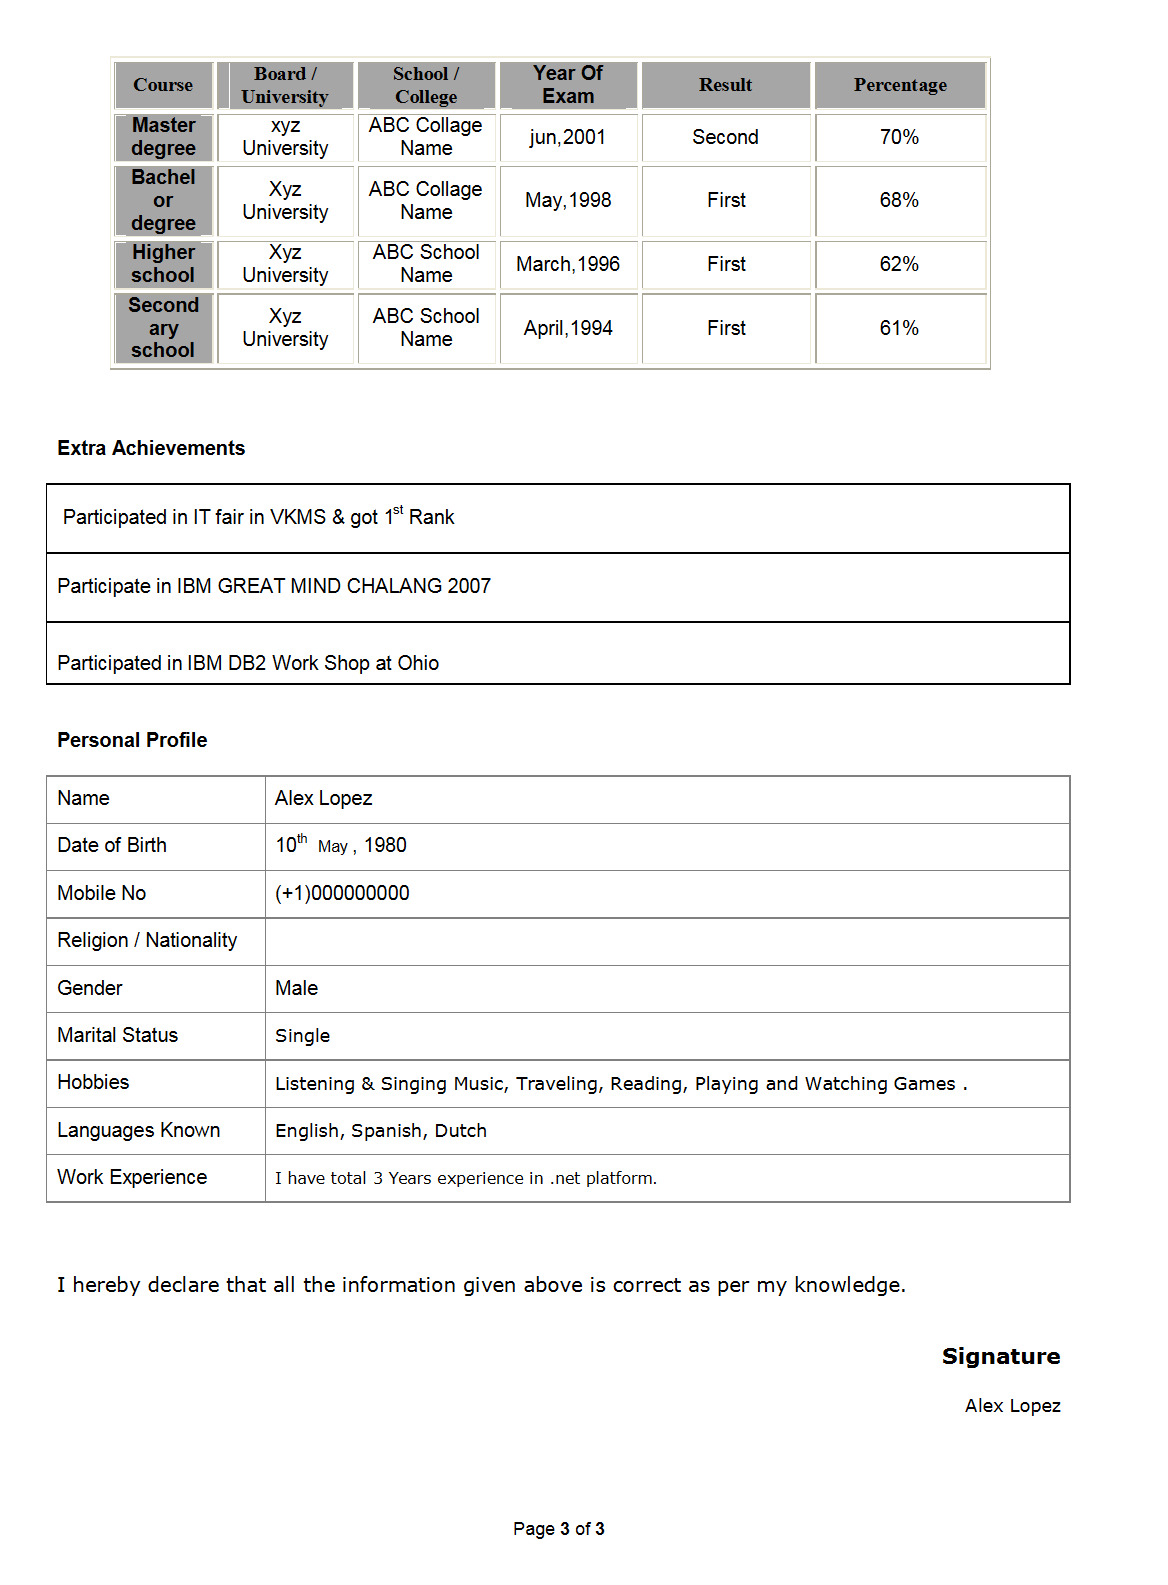 Embedded software engineer resume template